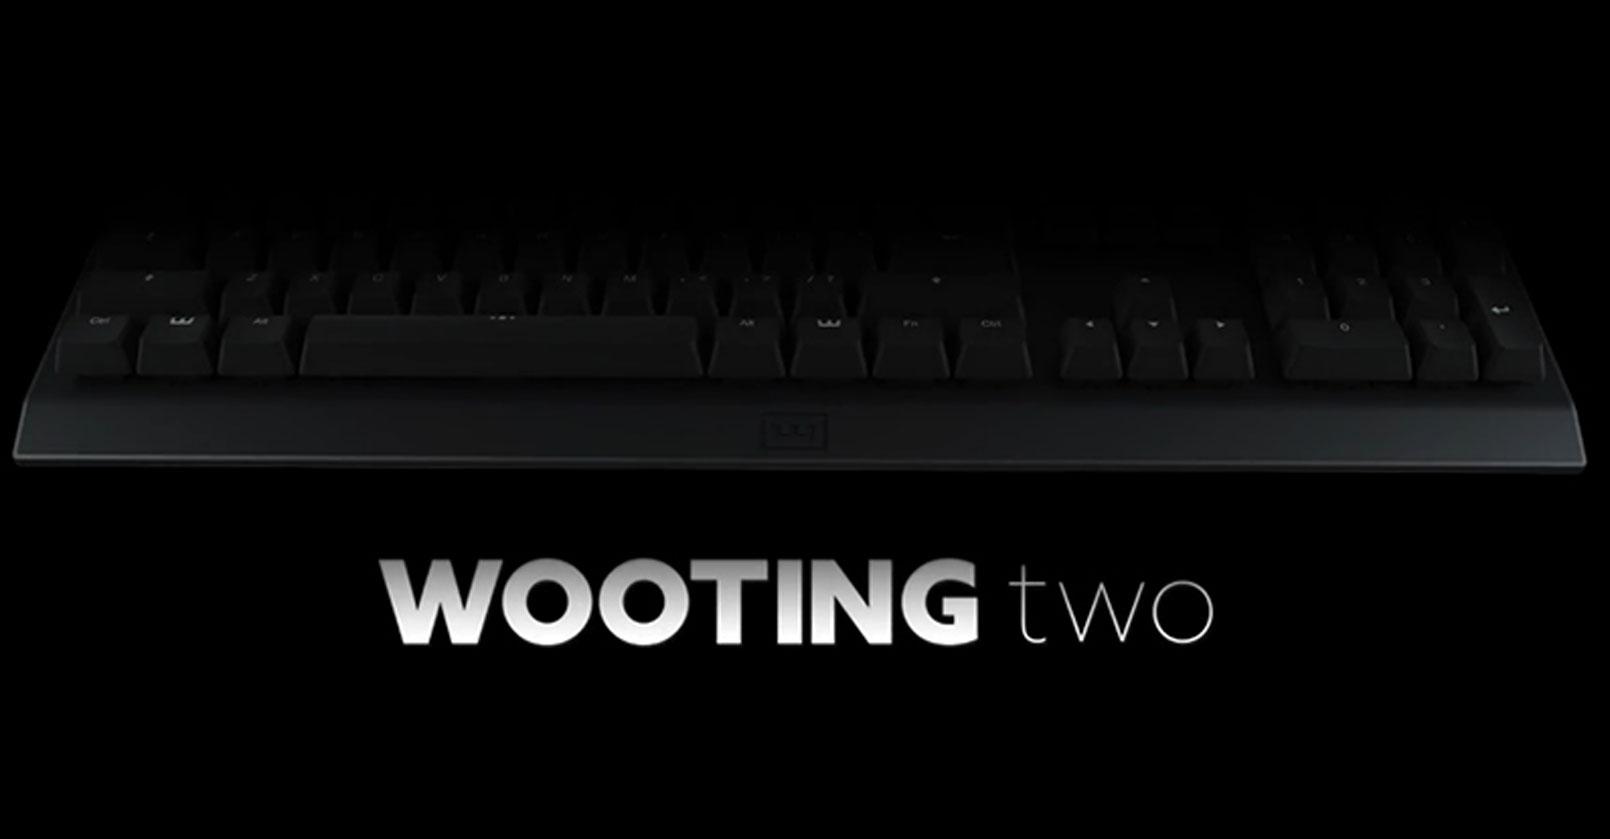 Wooting two, teclado gaming analógico